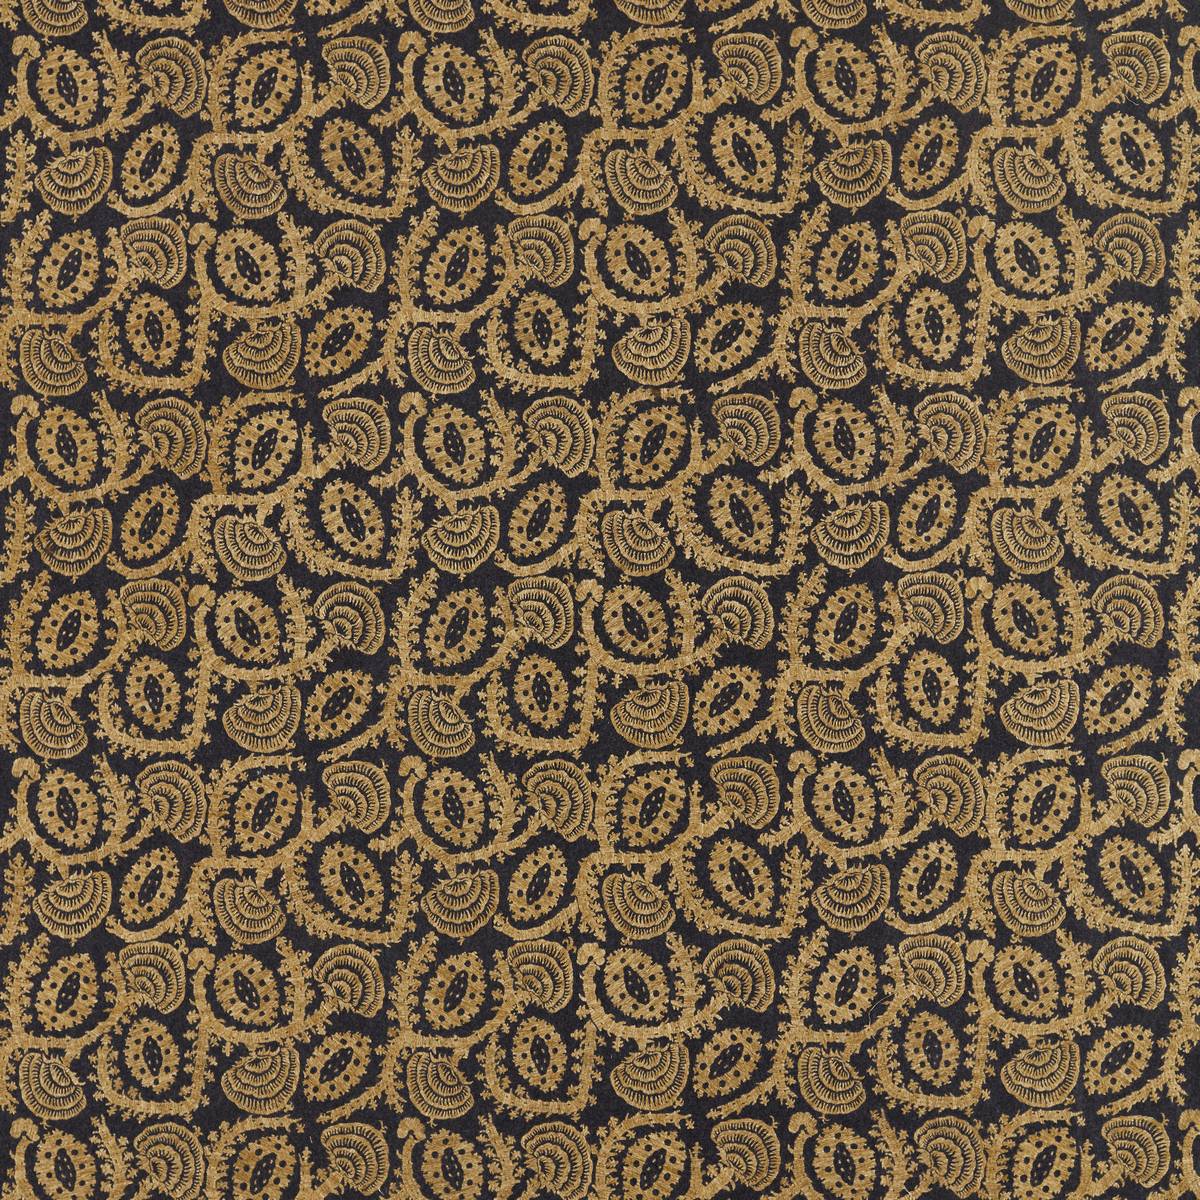 Suzani Embroidery Antique Gold/Vine Black Fabric by Zoffany